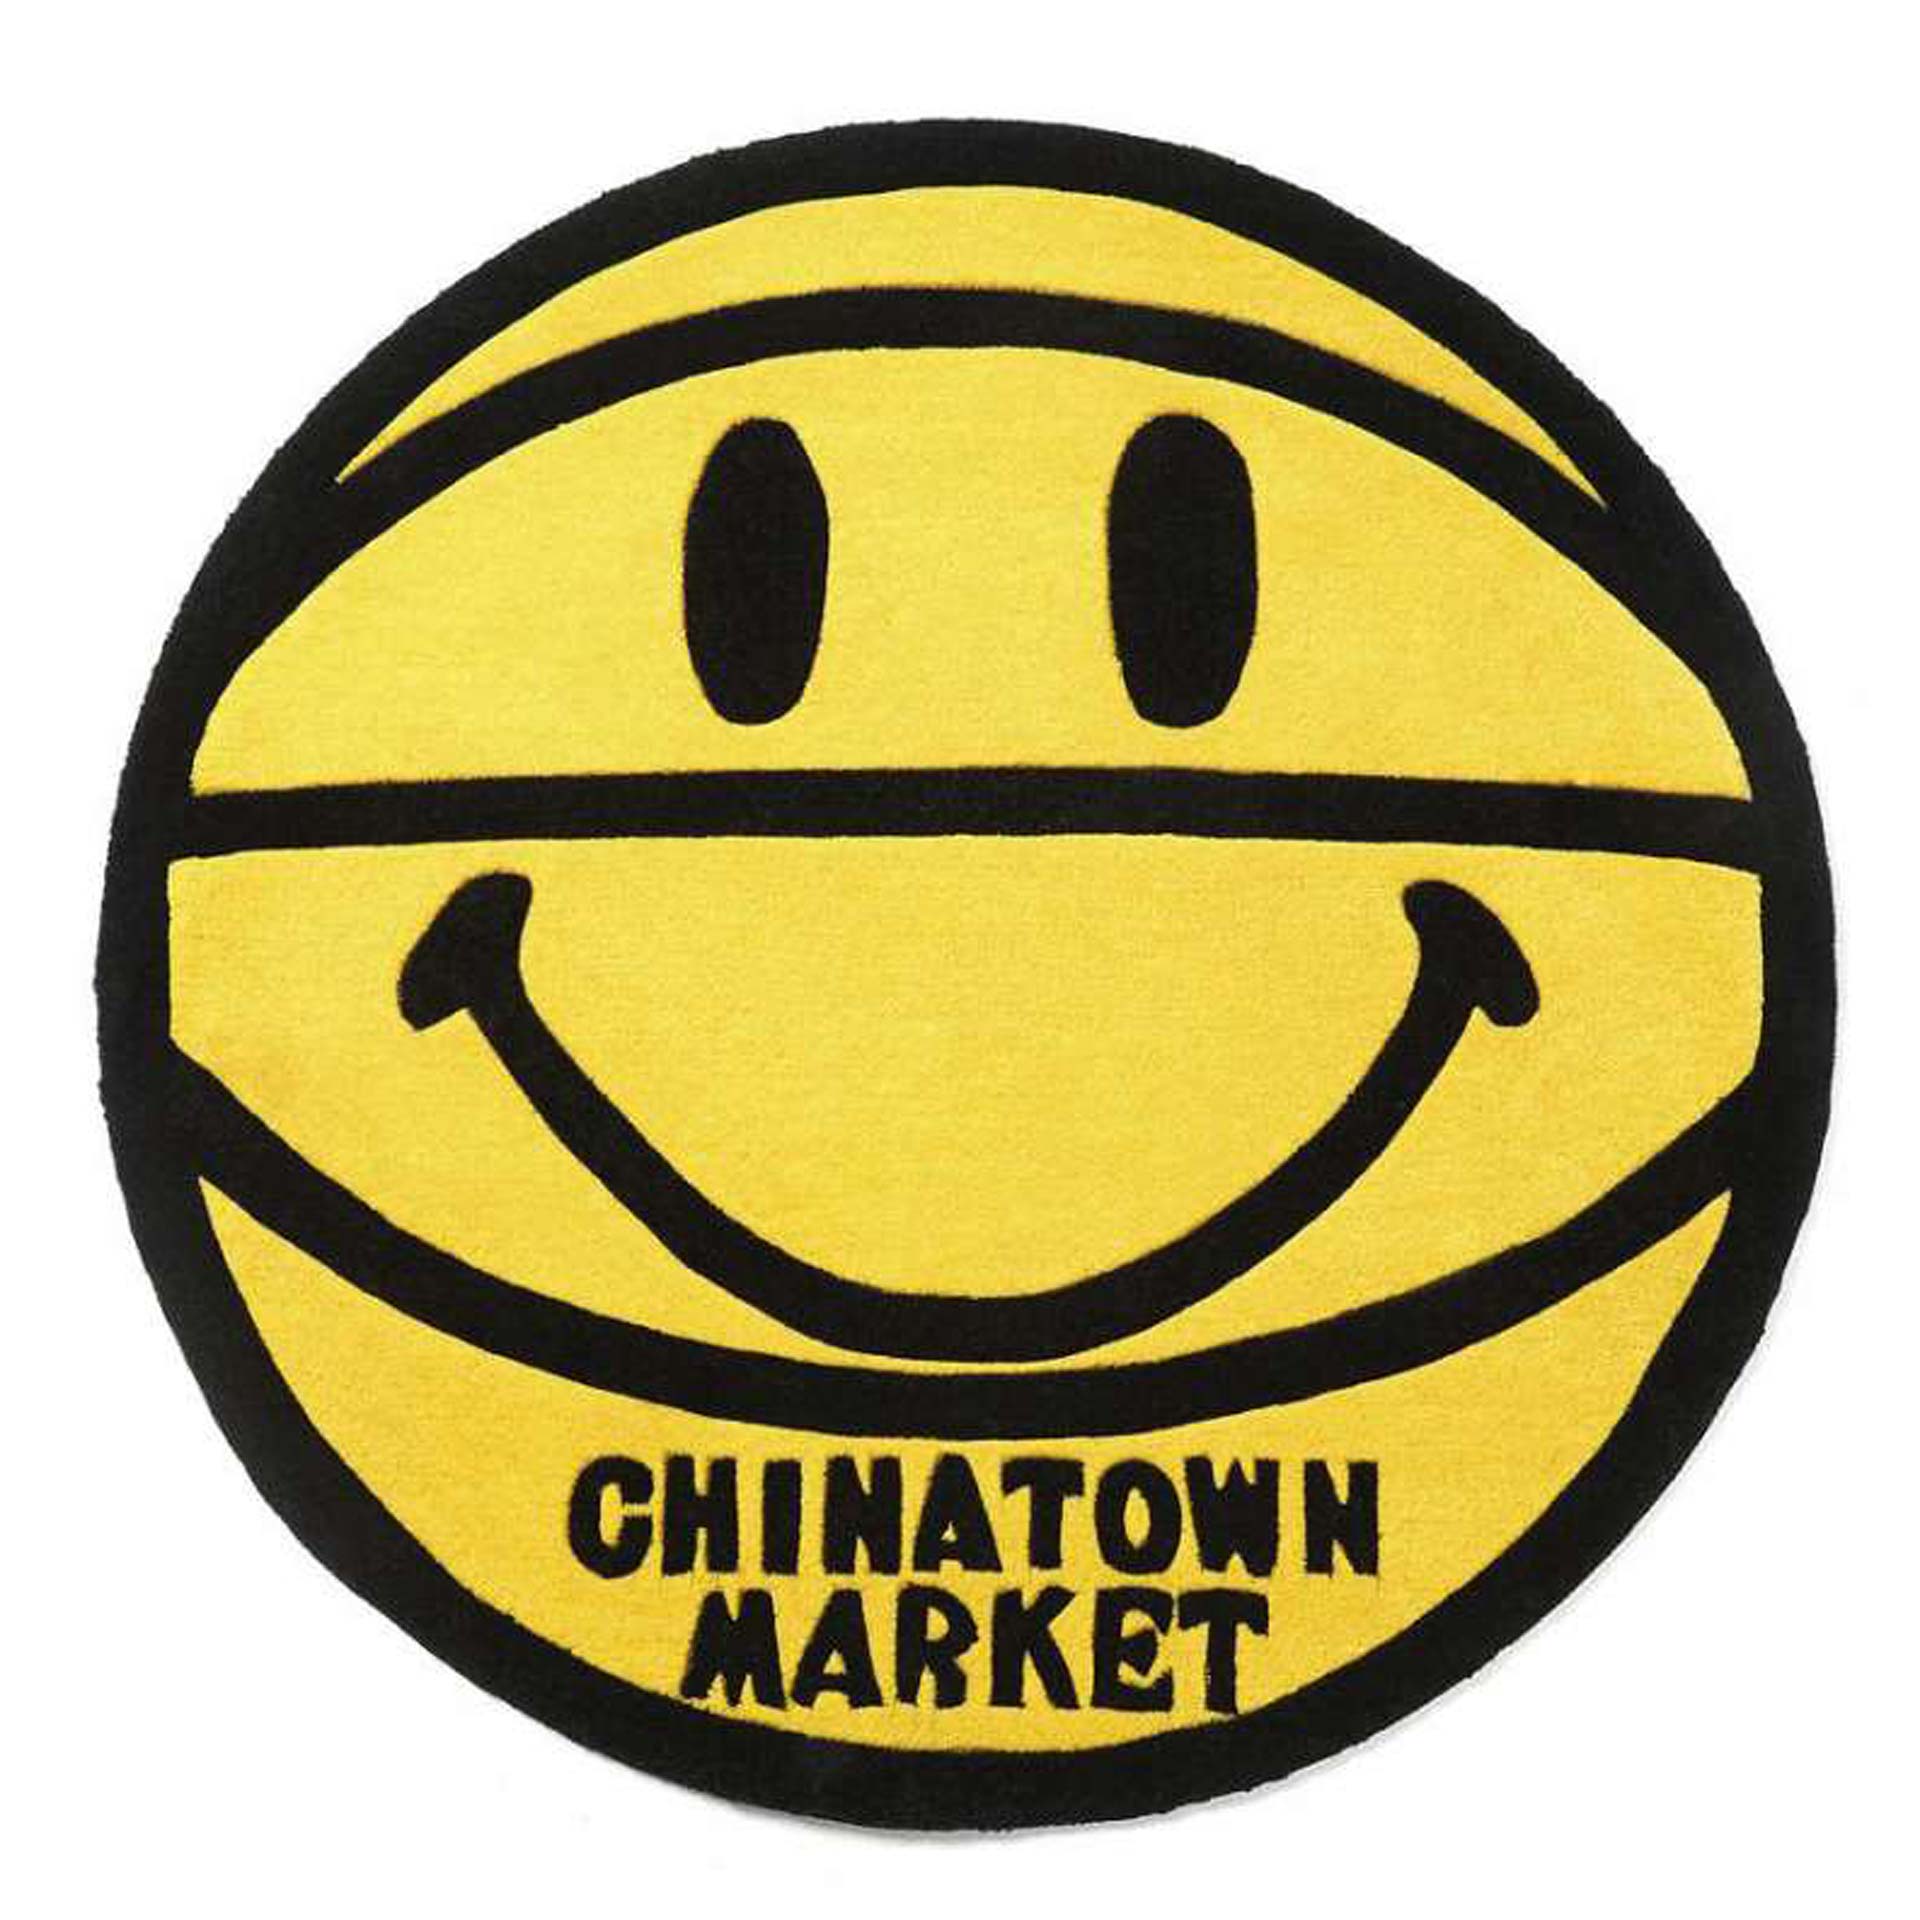 Chinatown Market Smiley Basketball Rug 4FT Yellow